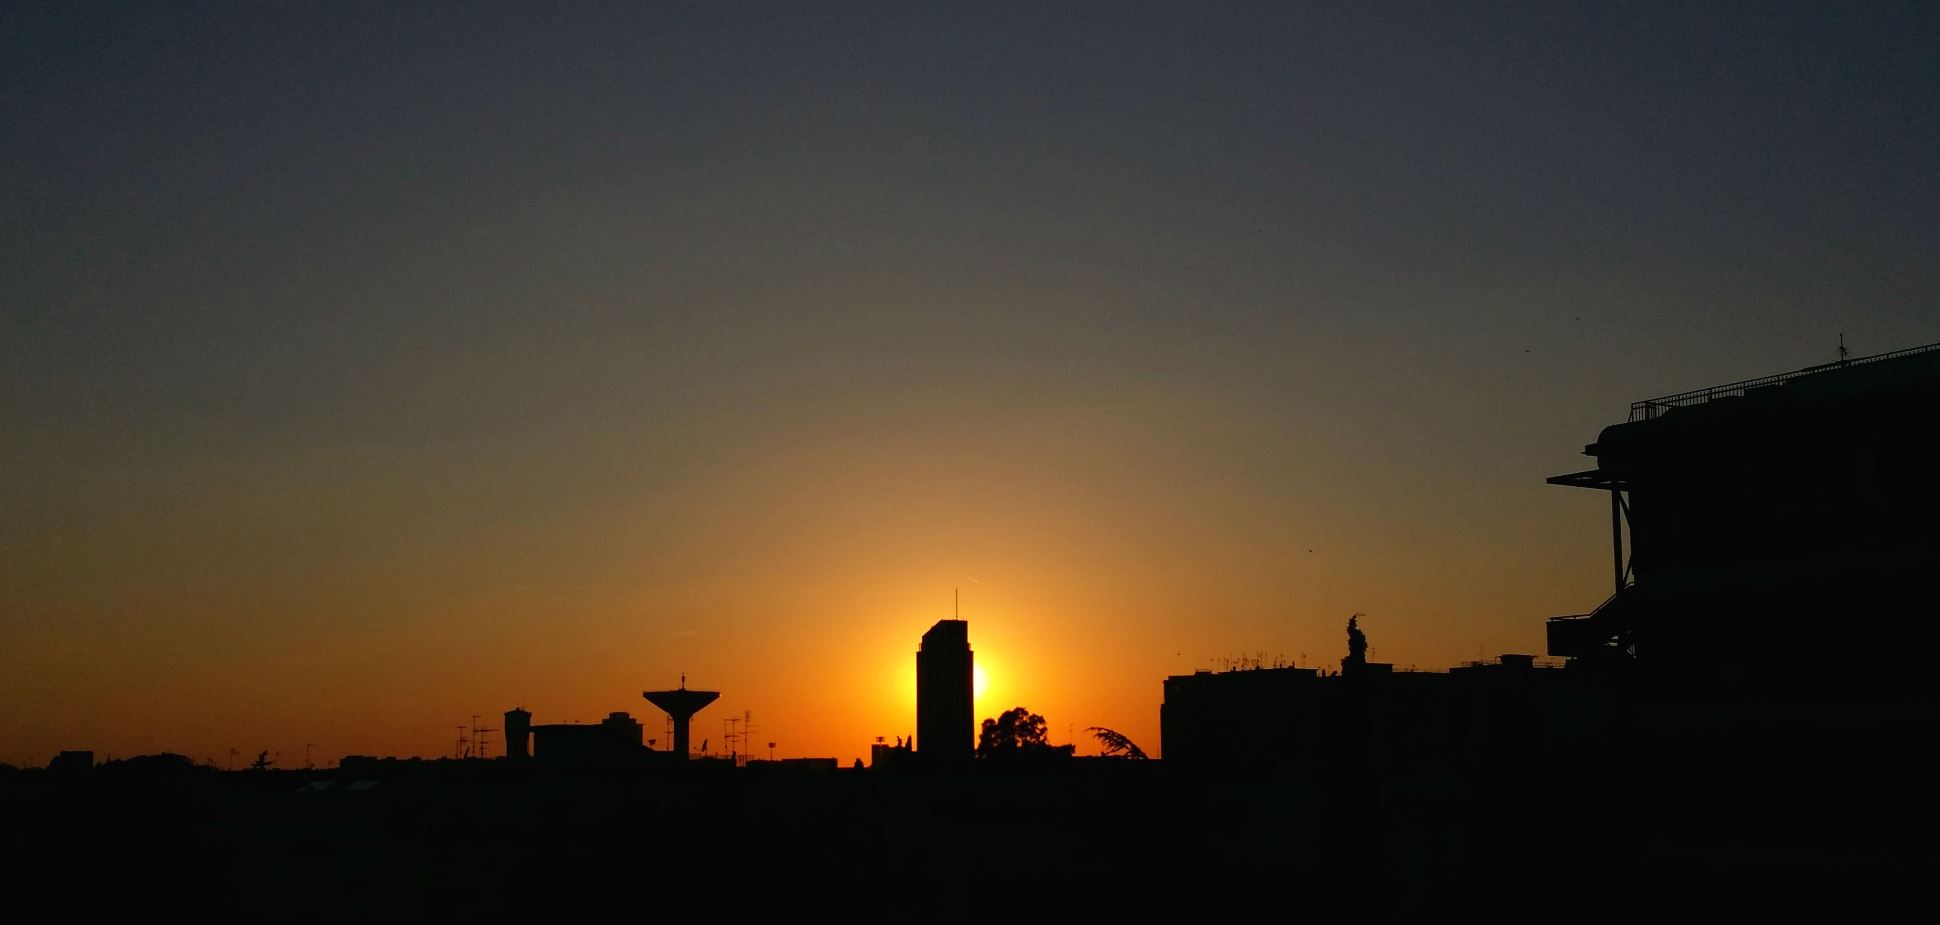 Tramonto in città foto di tramonti skyline tramonto a latina foto di tramonto città al tramonto immagini di tramonti bellissimi immagine di un tramonto a Latina migliore tramonti scattati